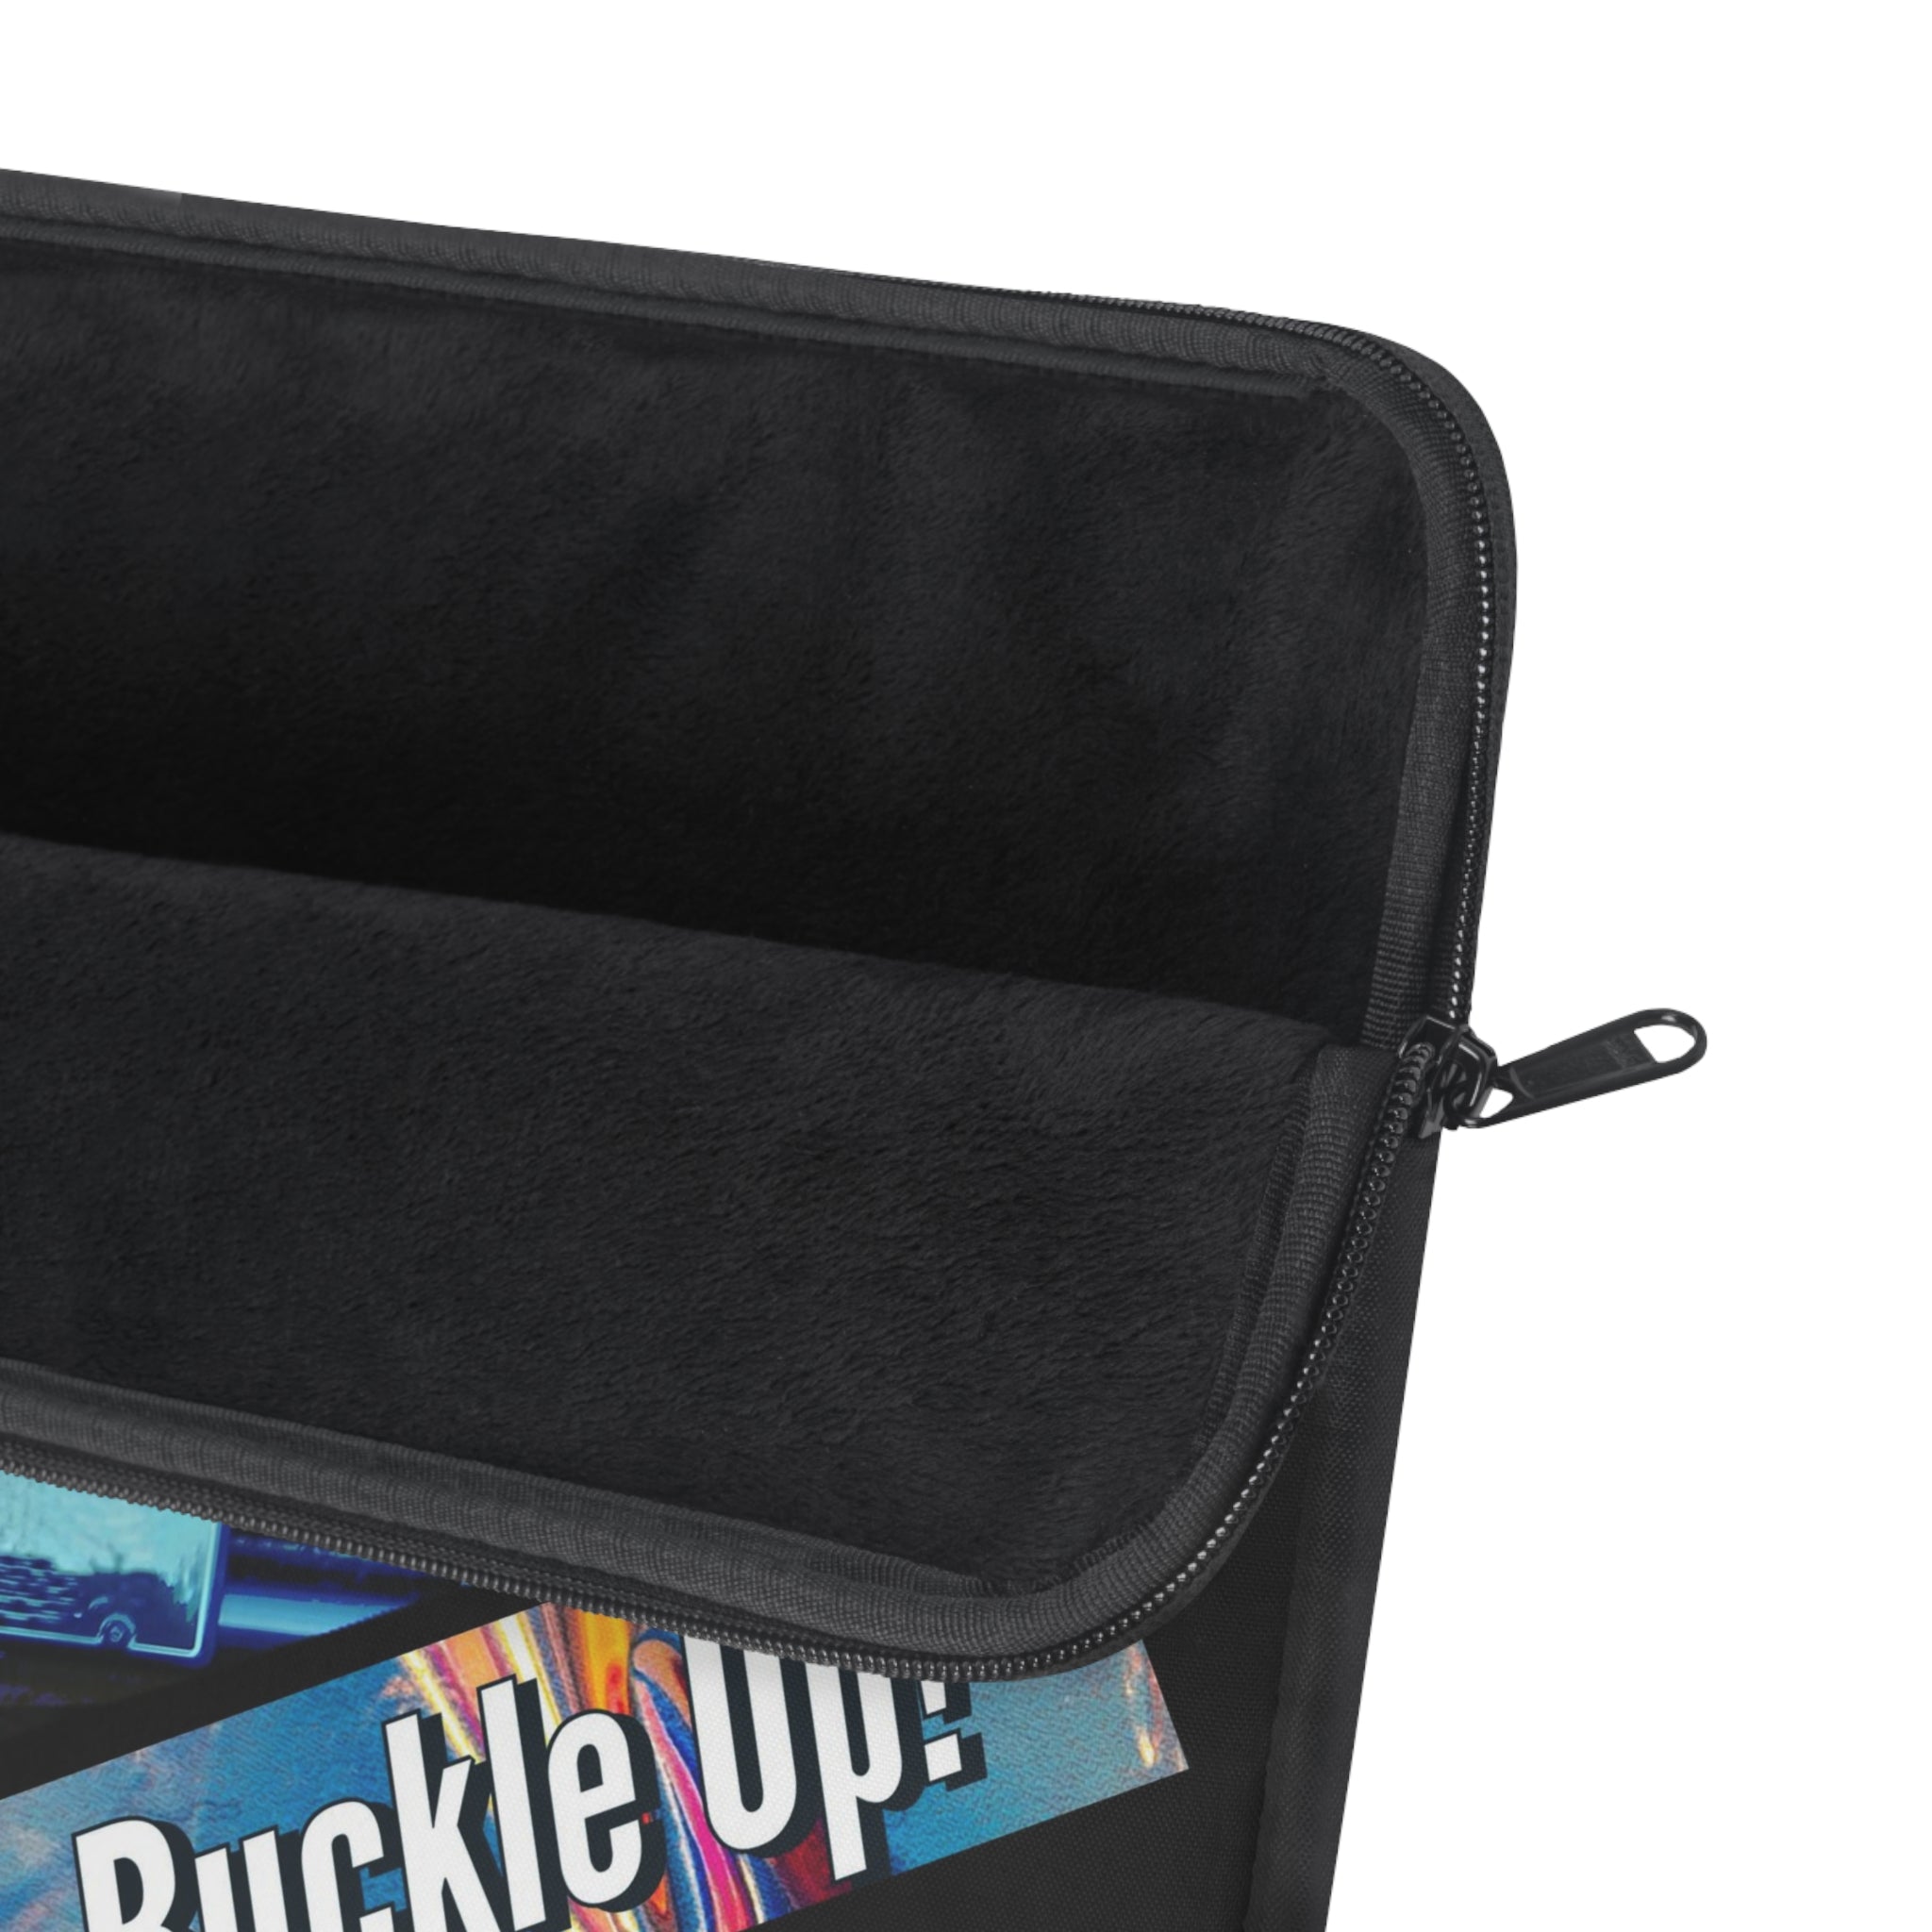 Buckle Up!  4-wheel Drive Laptop Sleeve